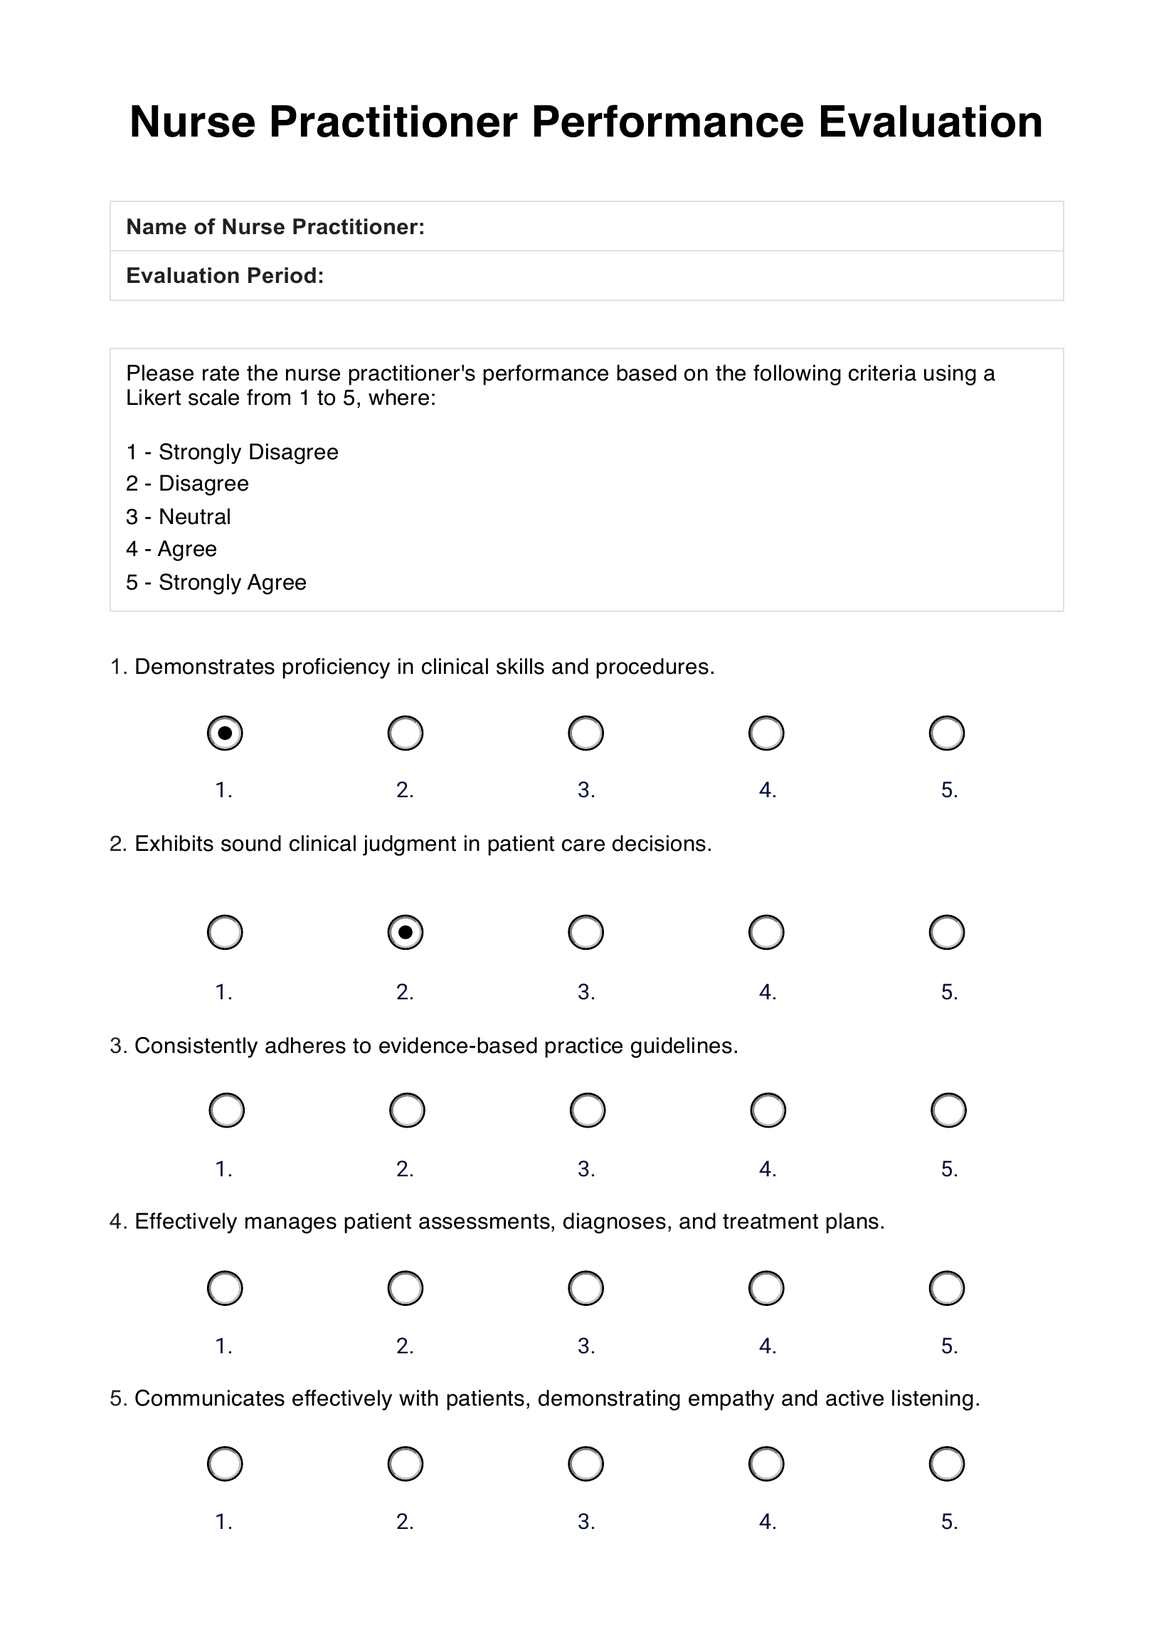 Nurse Practitioner Performance Evaluation PDF Example